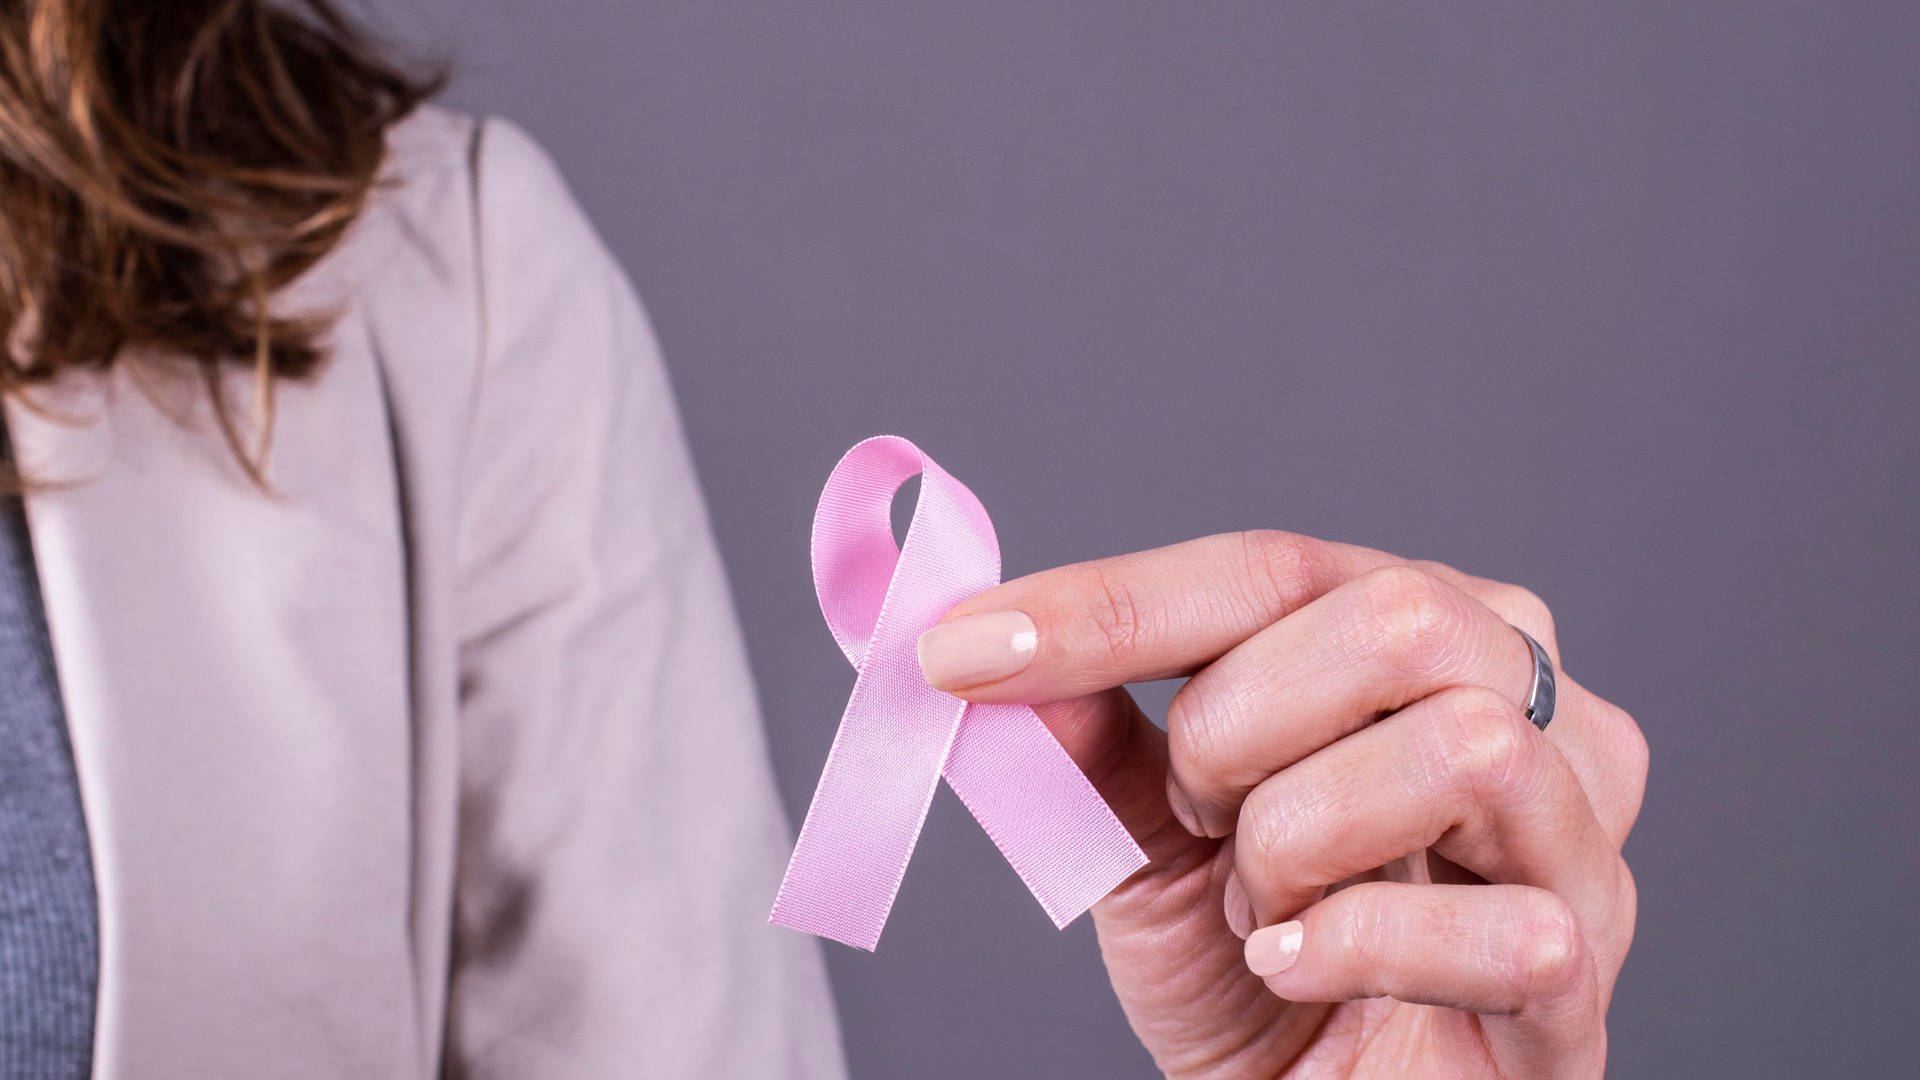 Diagnose Brustkrebs: Leben mit dem Tod vor Augen